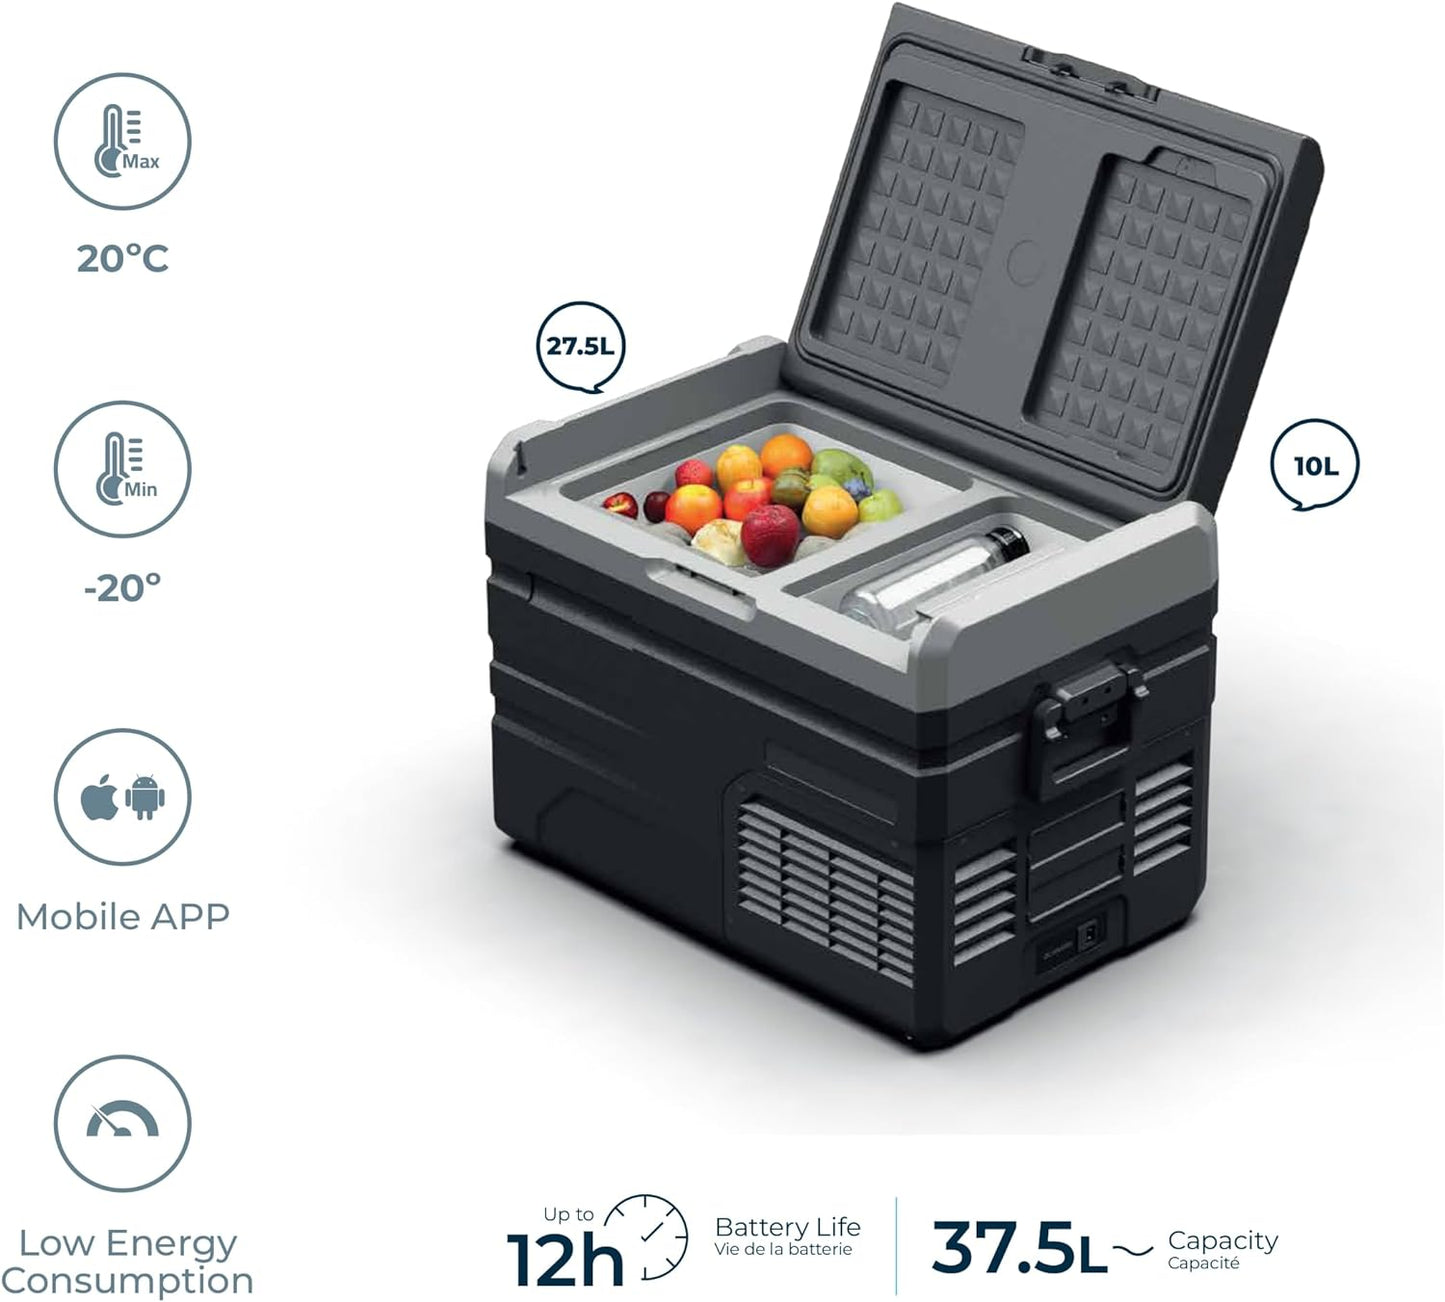 Powerology 37L Smart Dual Compartment Fridge And Freezer, Upto -20 Celcius.